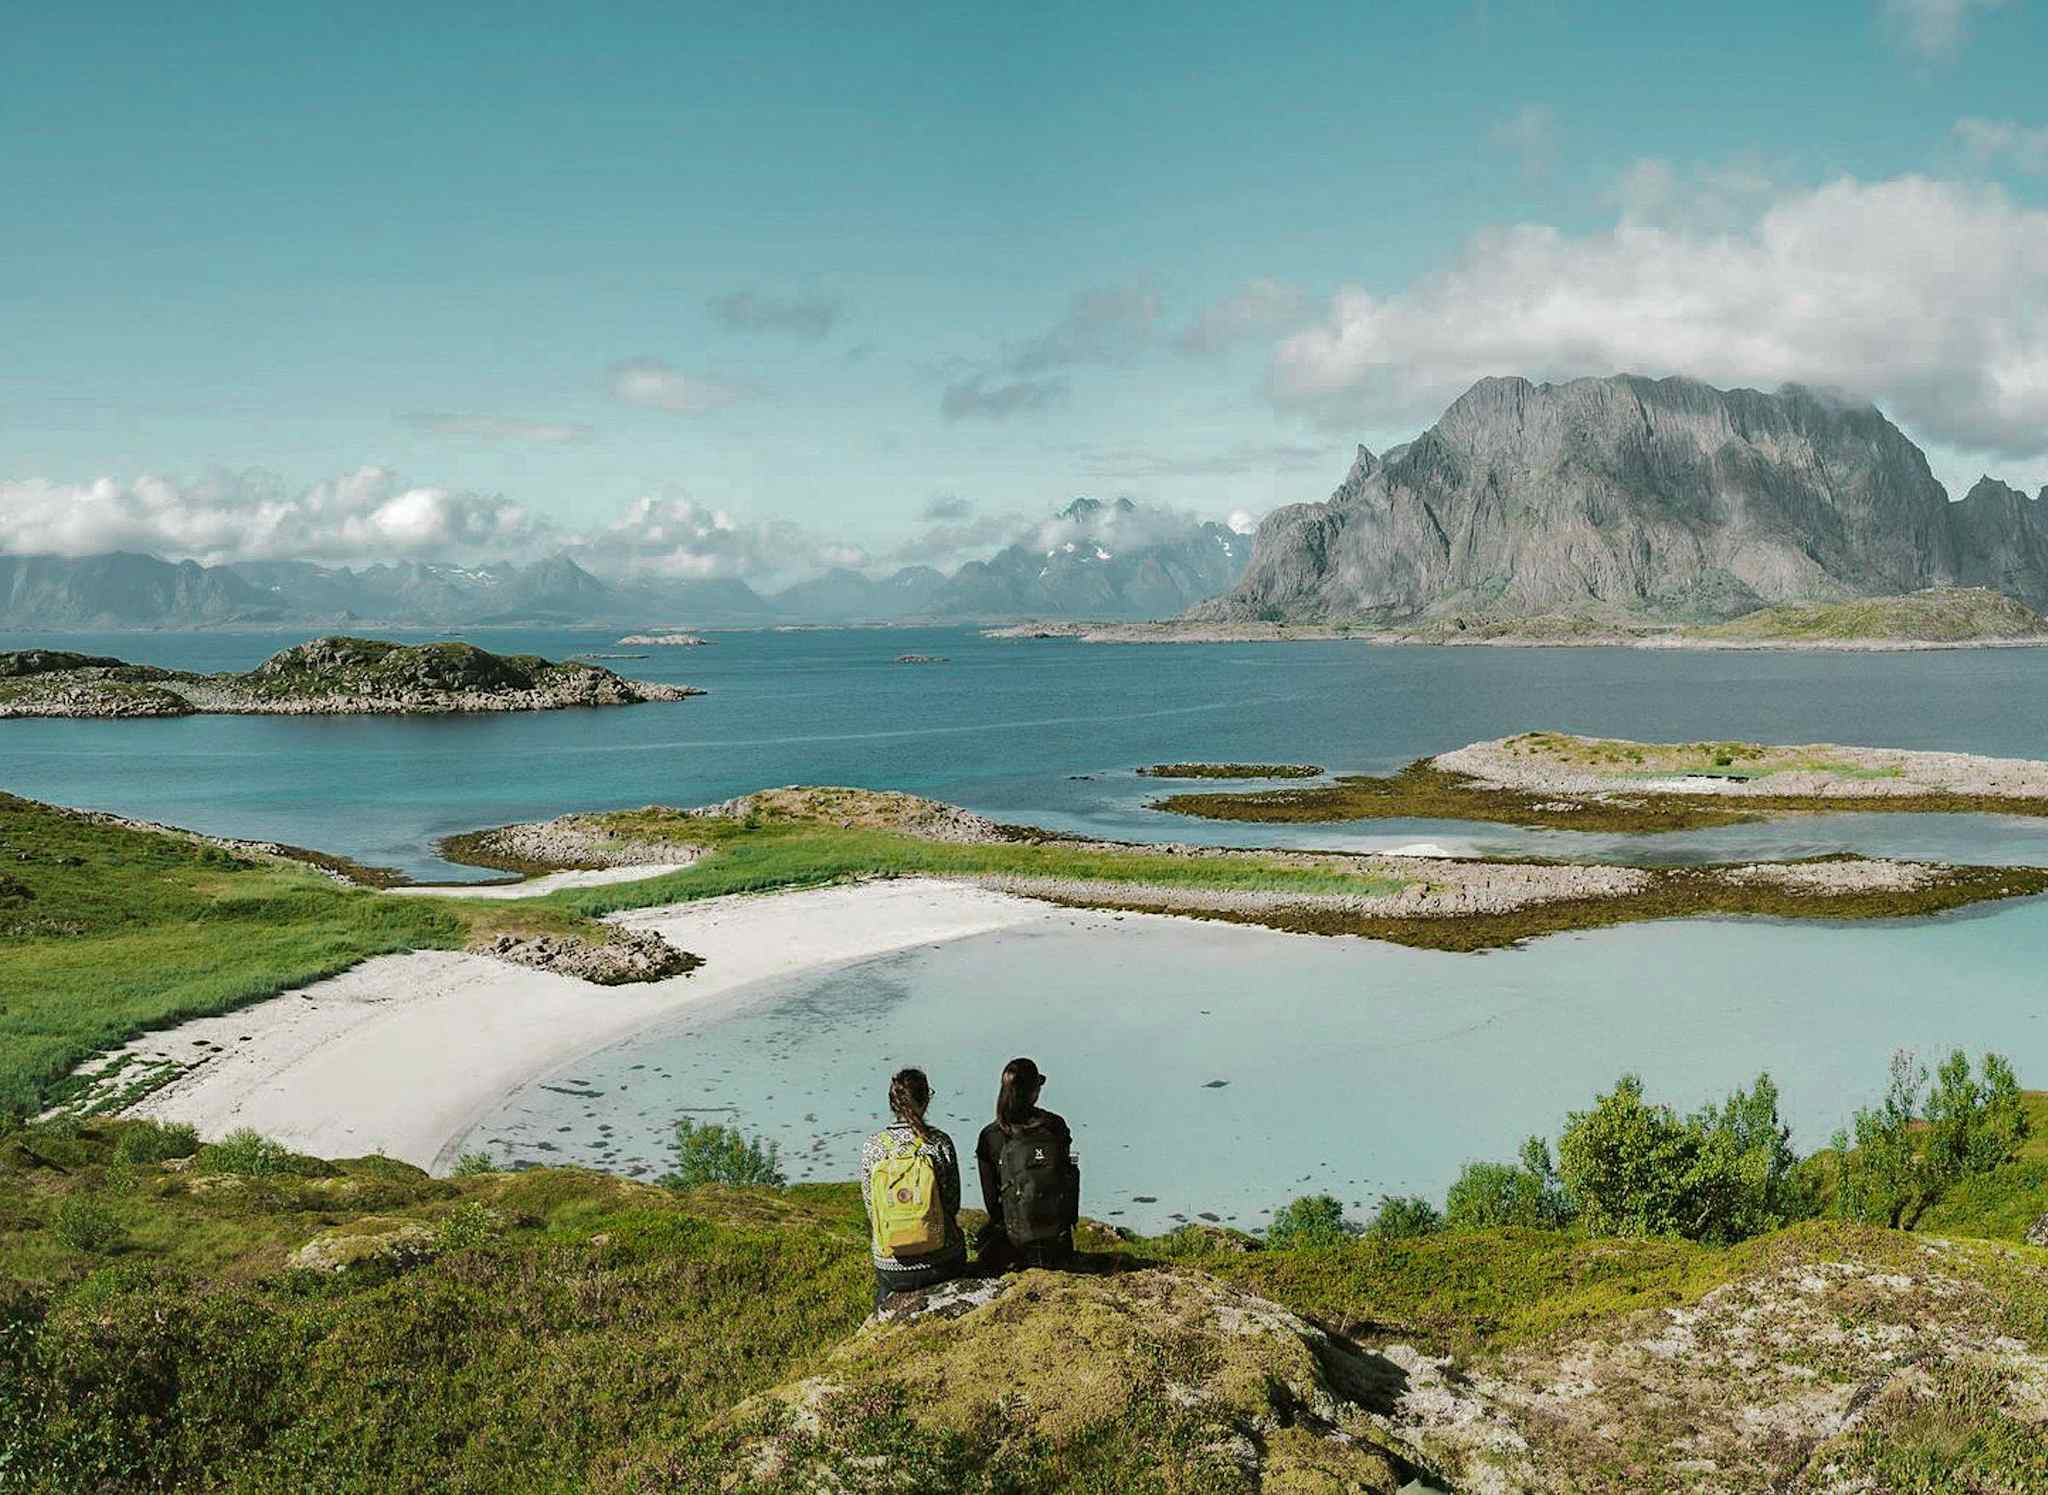 Skrova island, Lofoten Islands, Norway
Host image: Pukka Travels